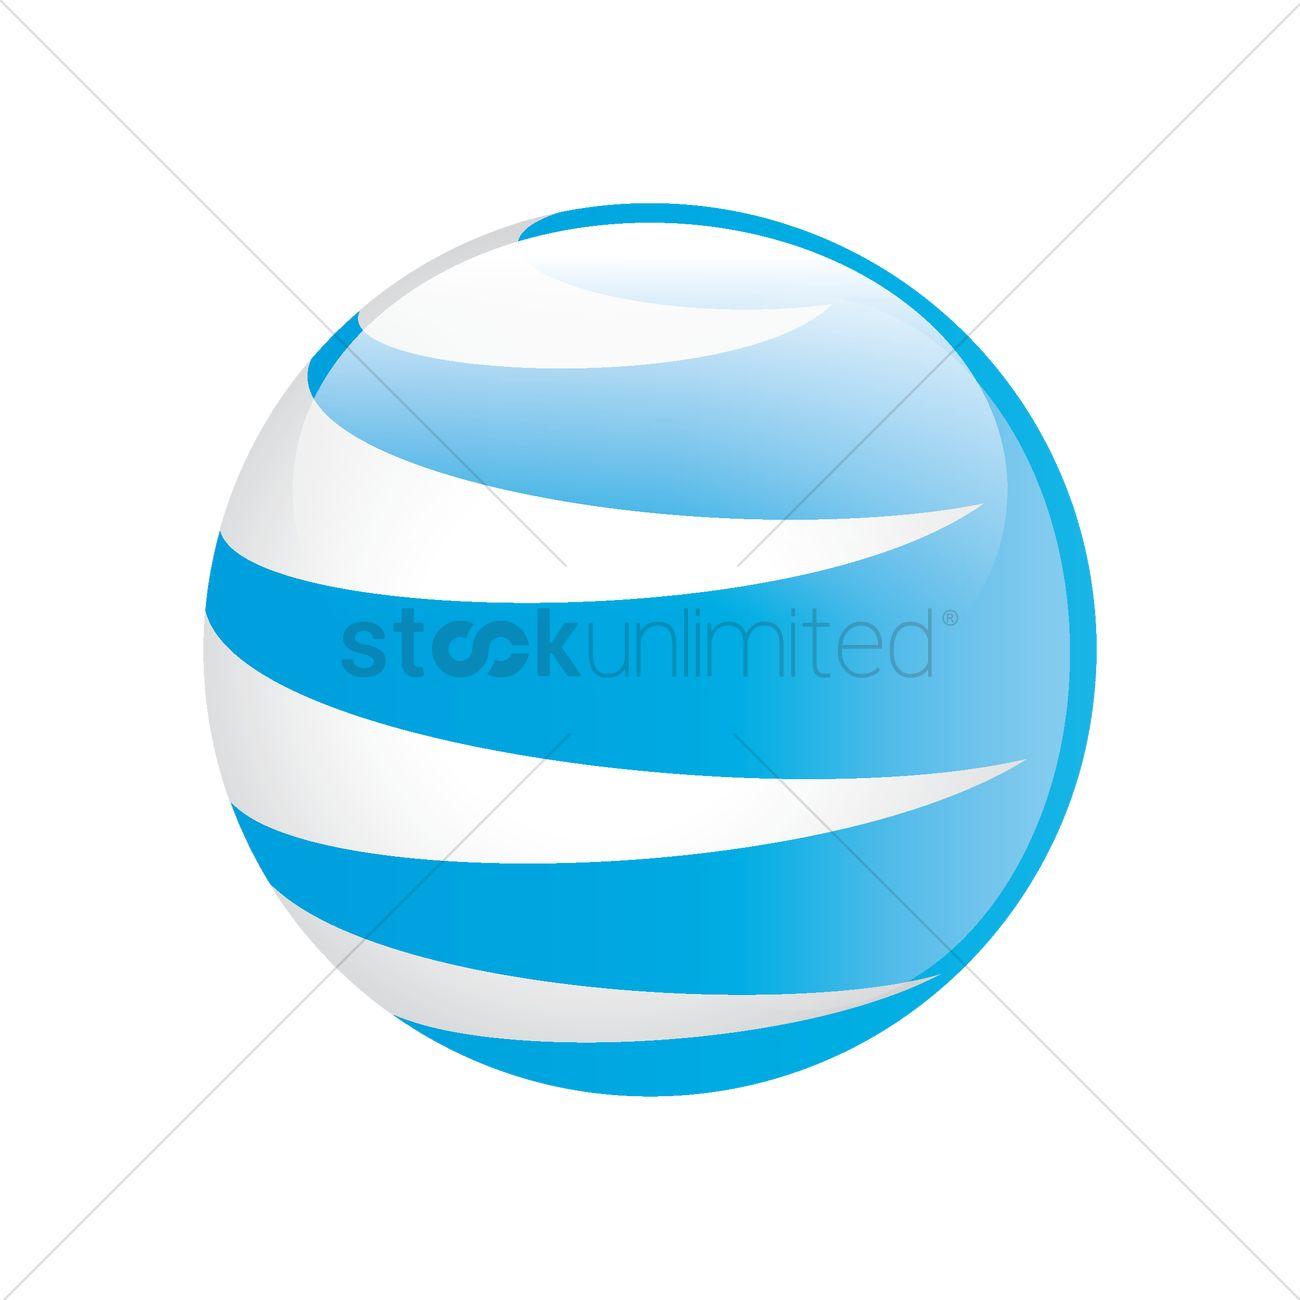 Spherical Logo - Spherical logo element design Vector Image - 2004264 | StockUnlimited